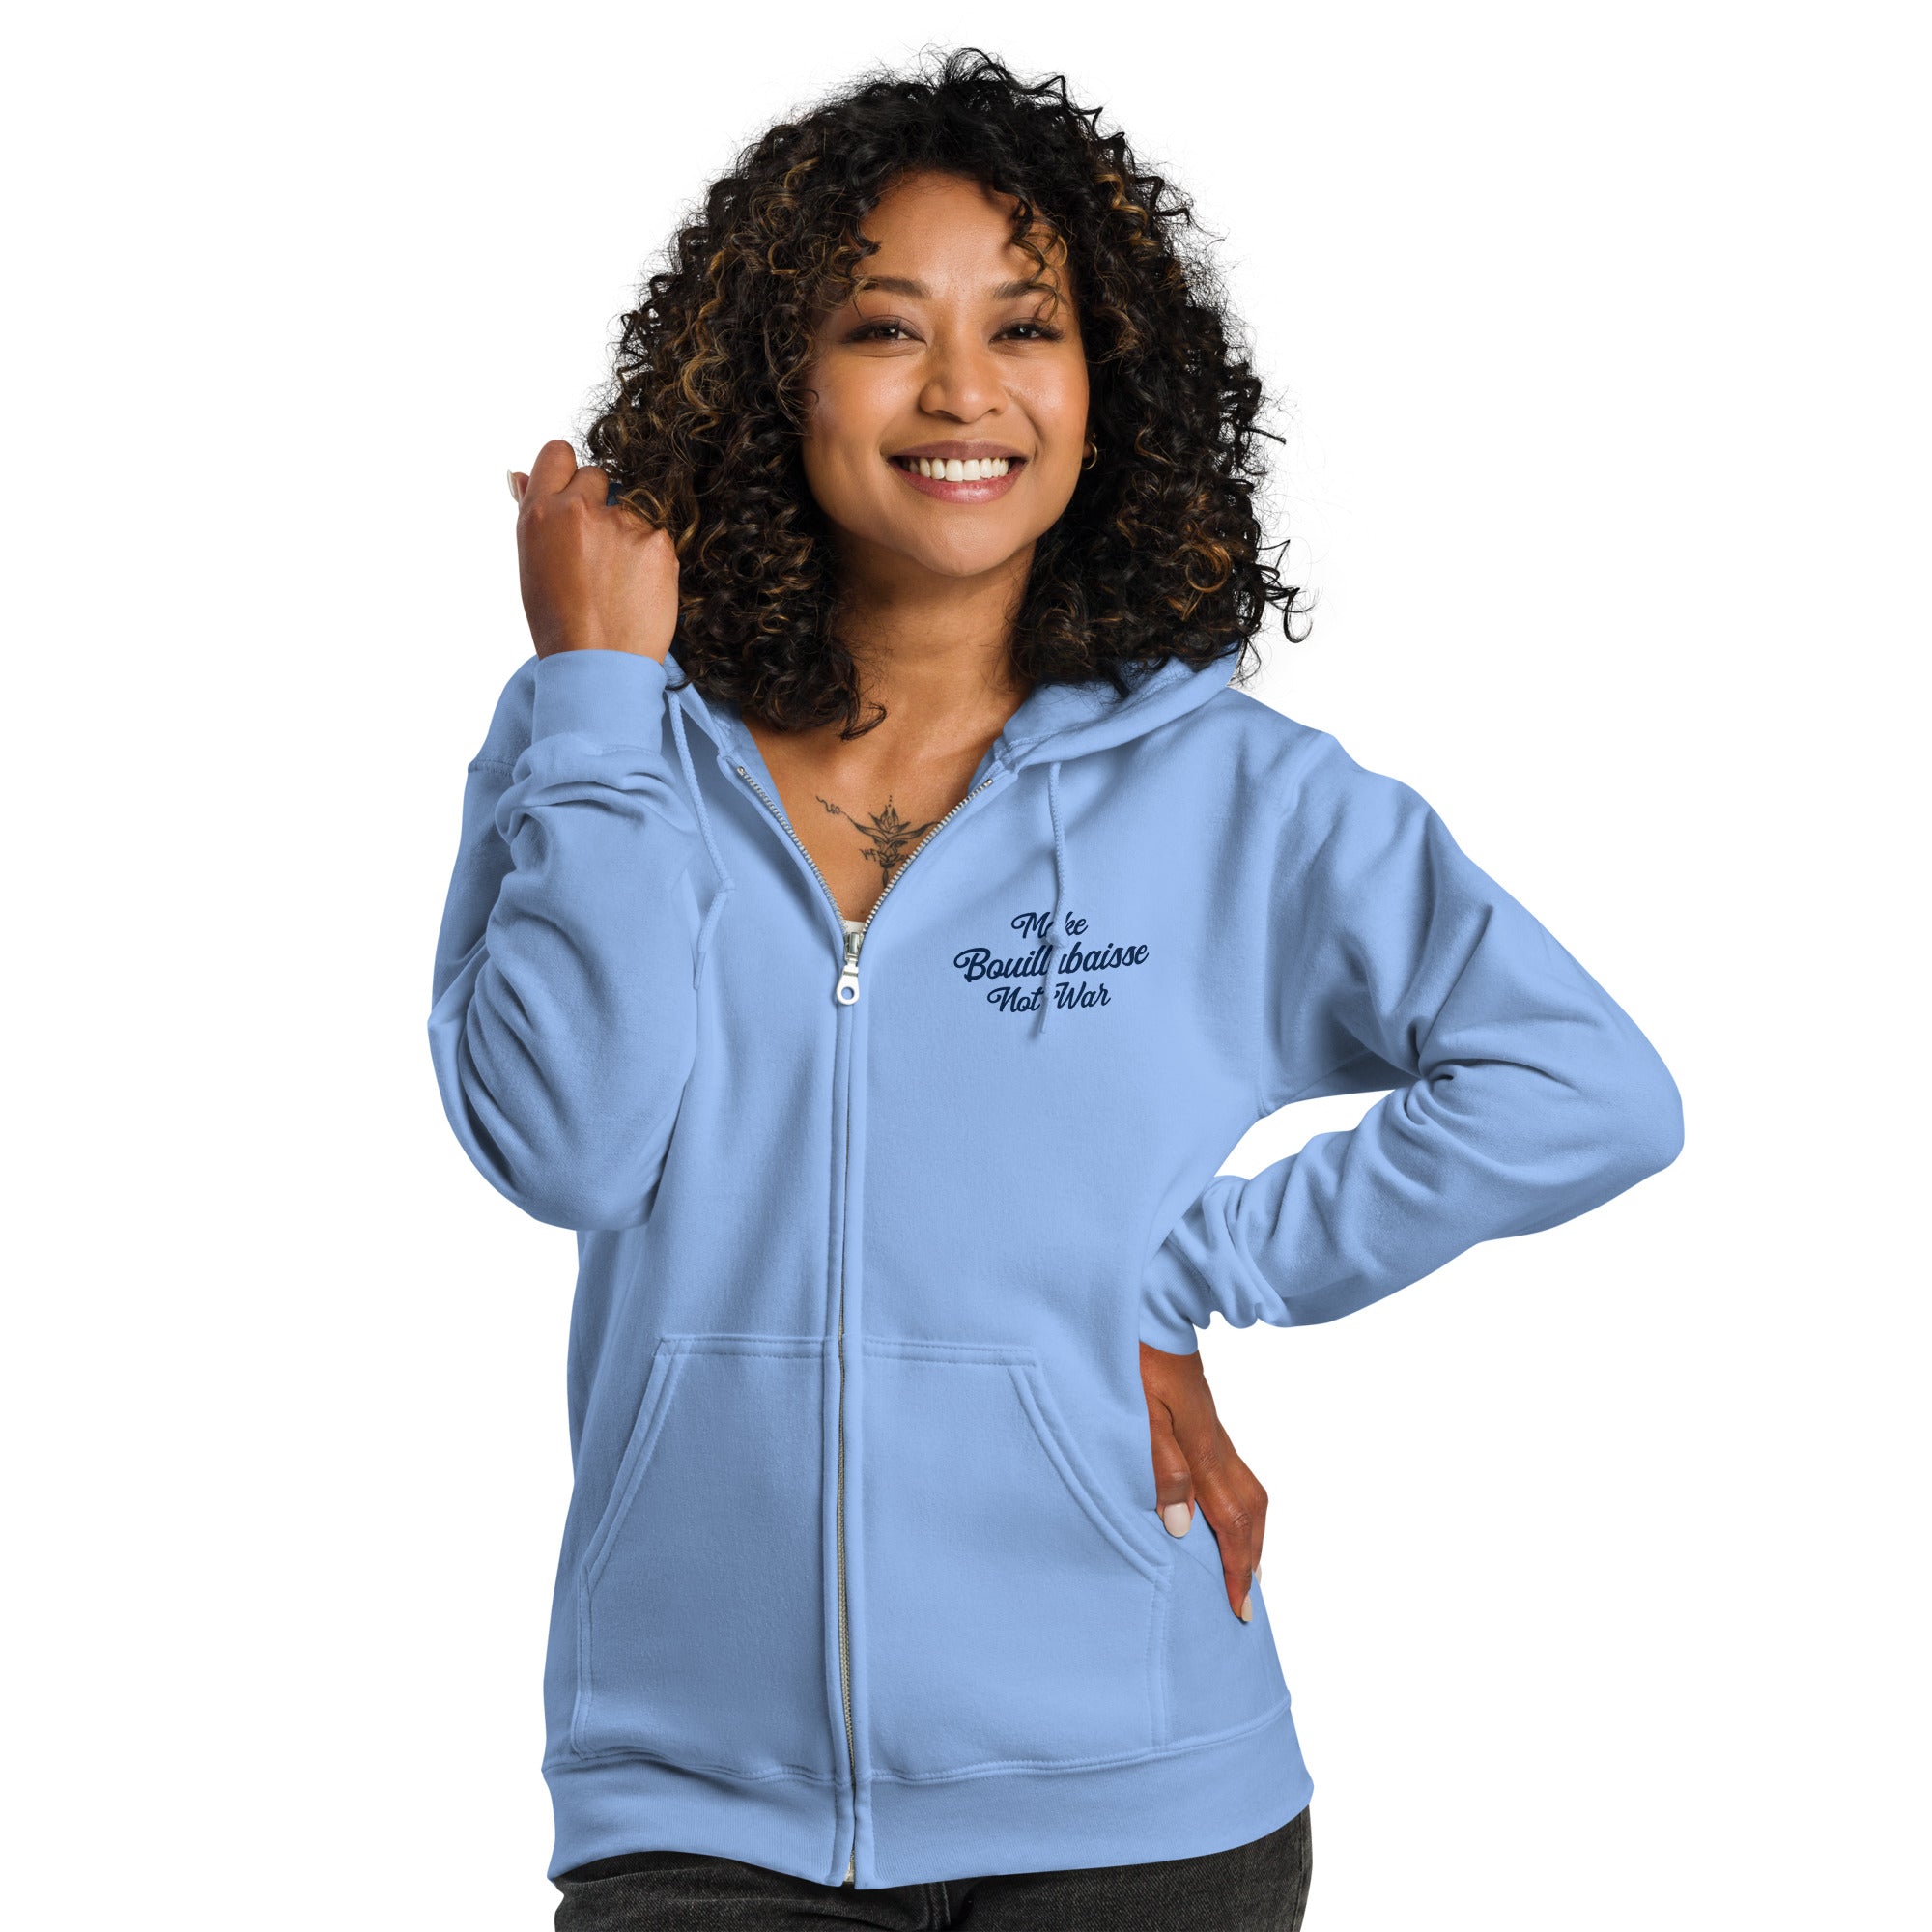 Unisex heavy blend zip hoodie Make Bouillabaisse Not War Navy Text Only (front & back)